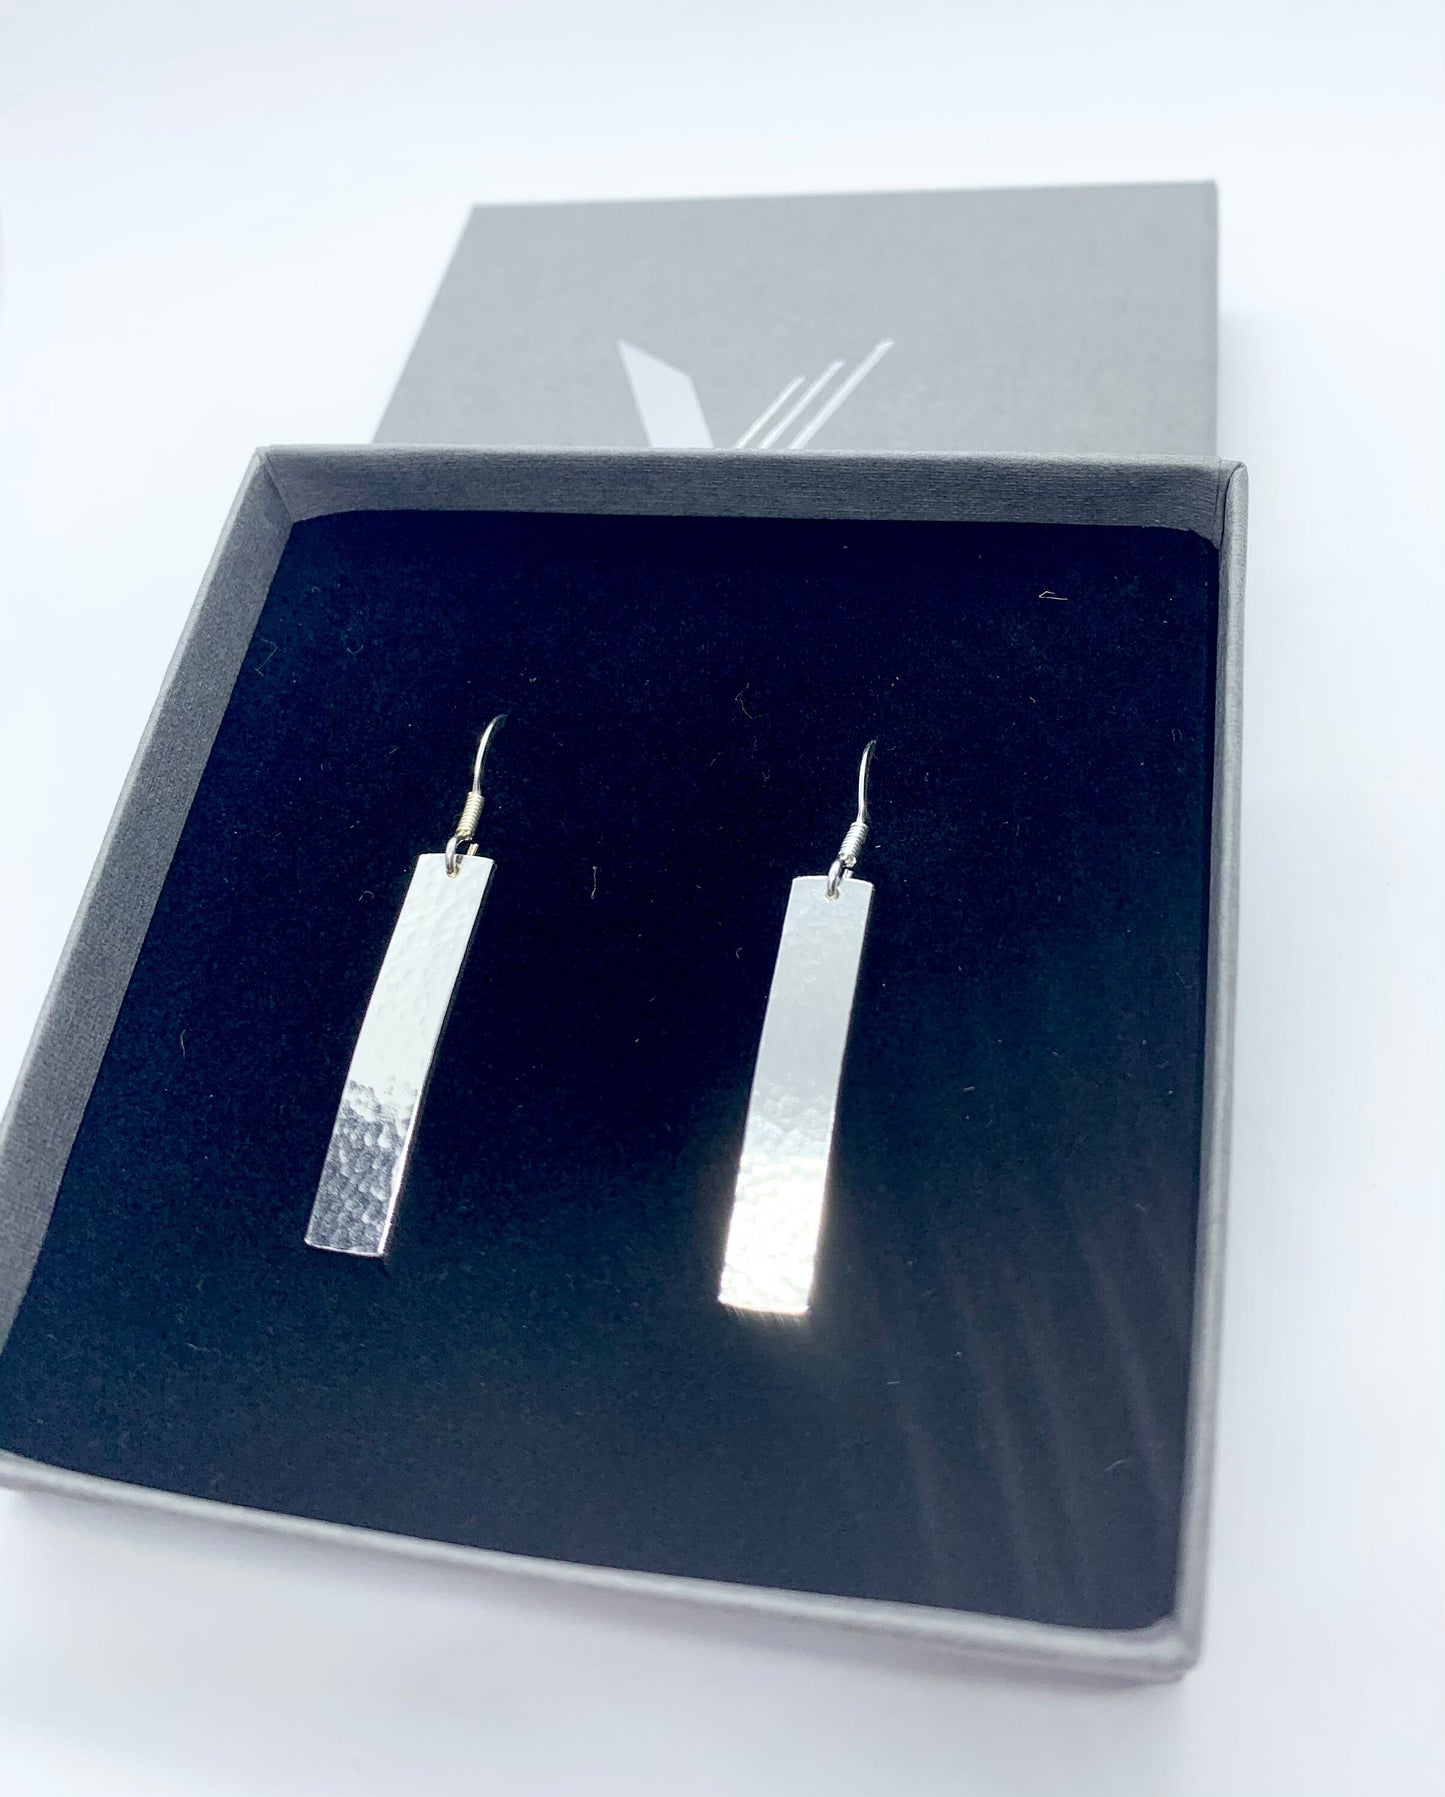 Hammered silver bar earrings